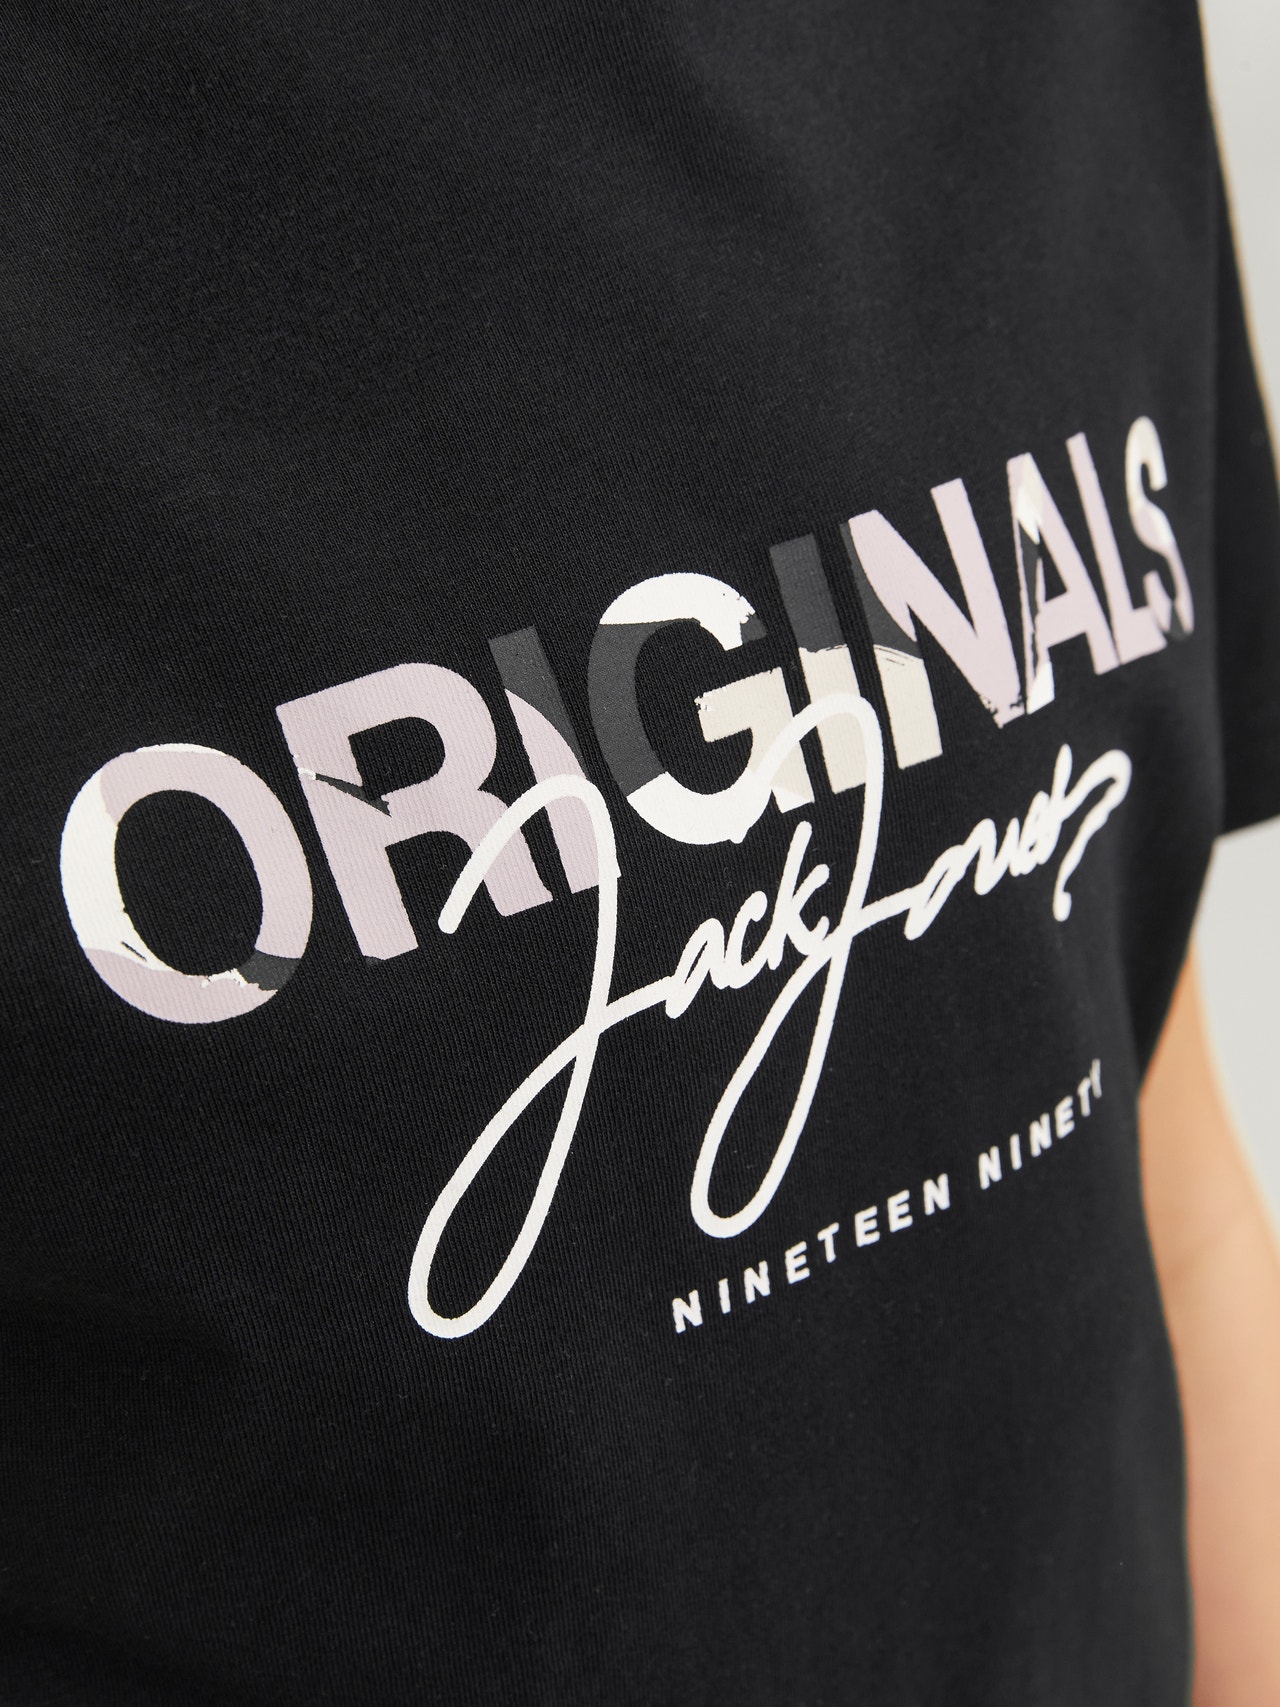 Jack & Jones Printed T-shirt For boys -Black - 12257133